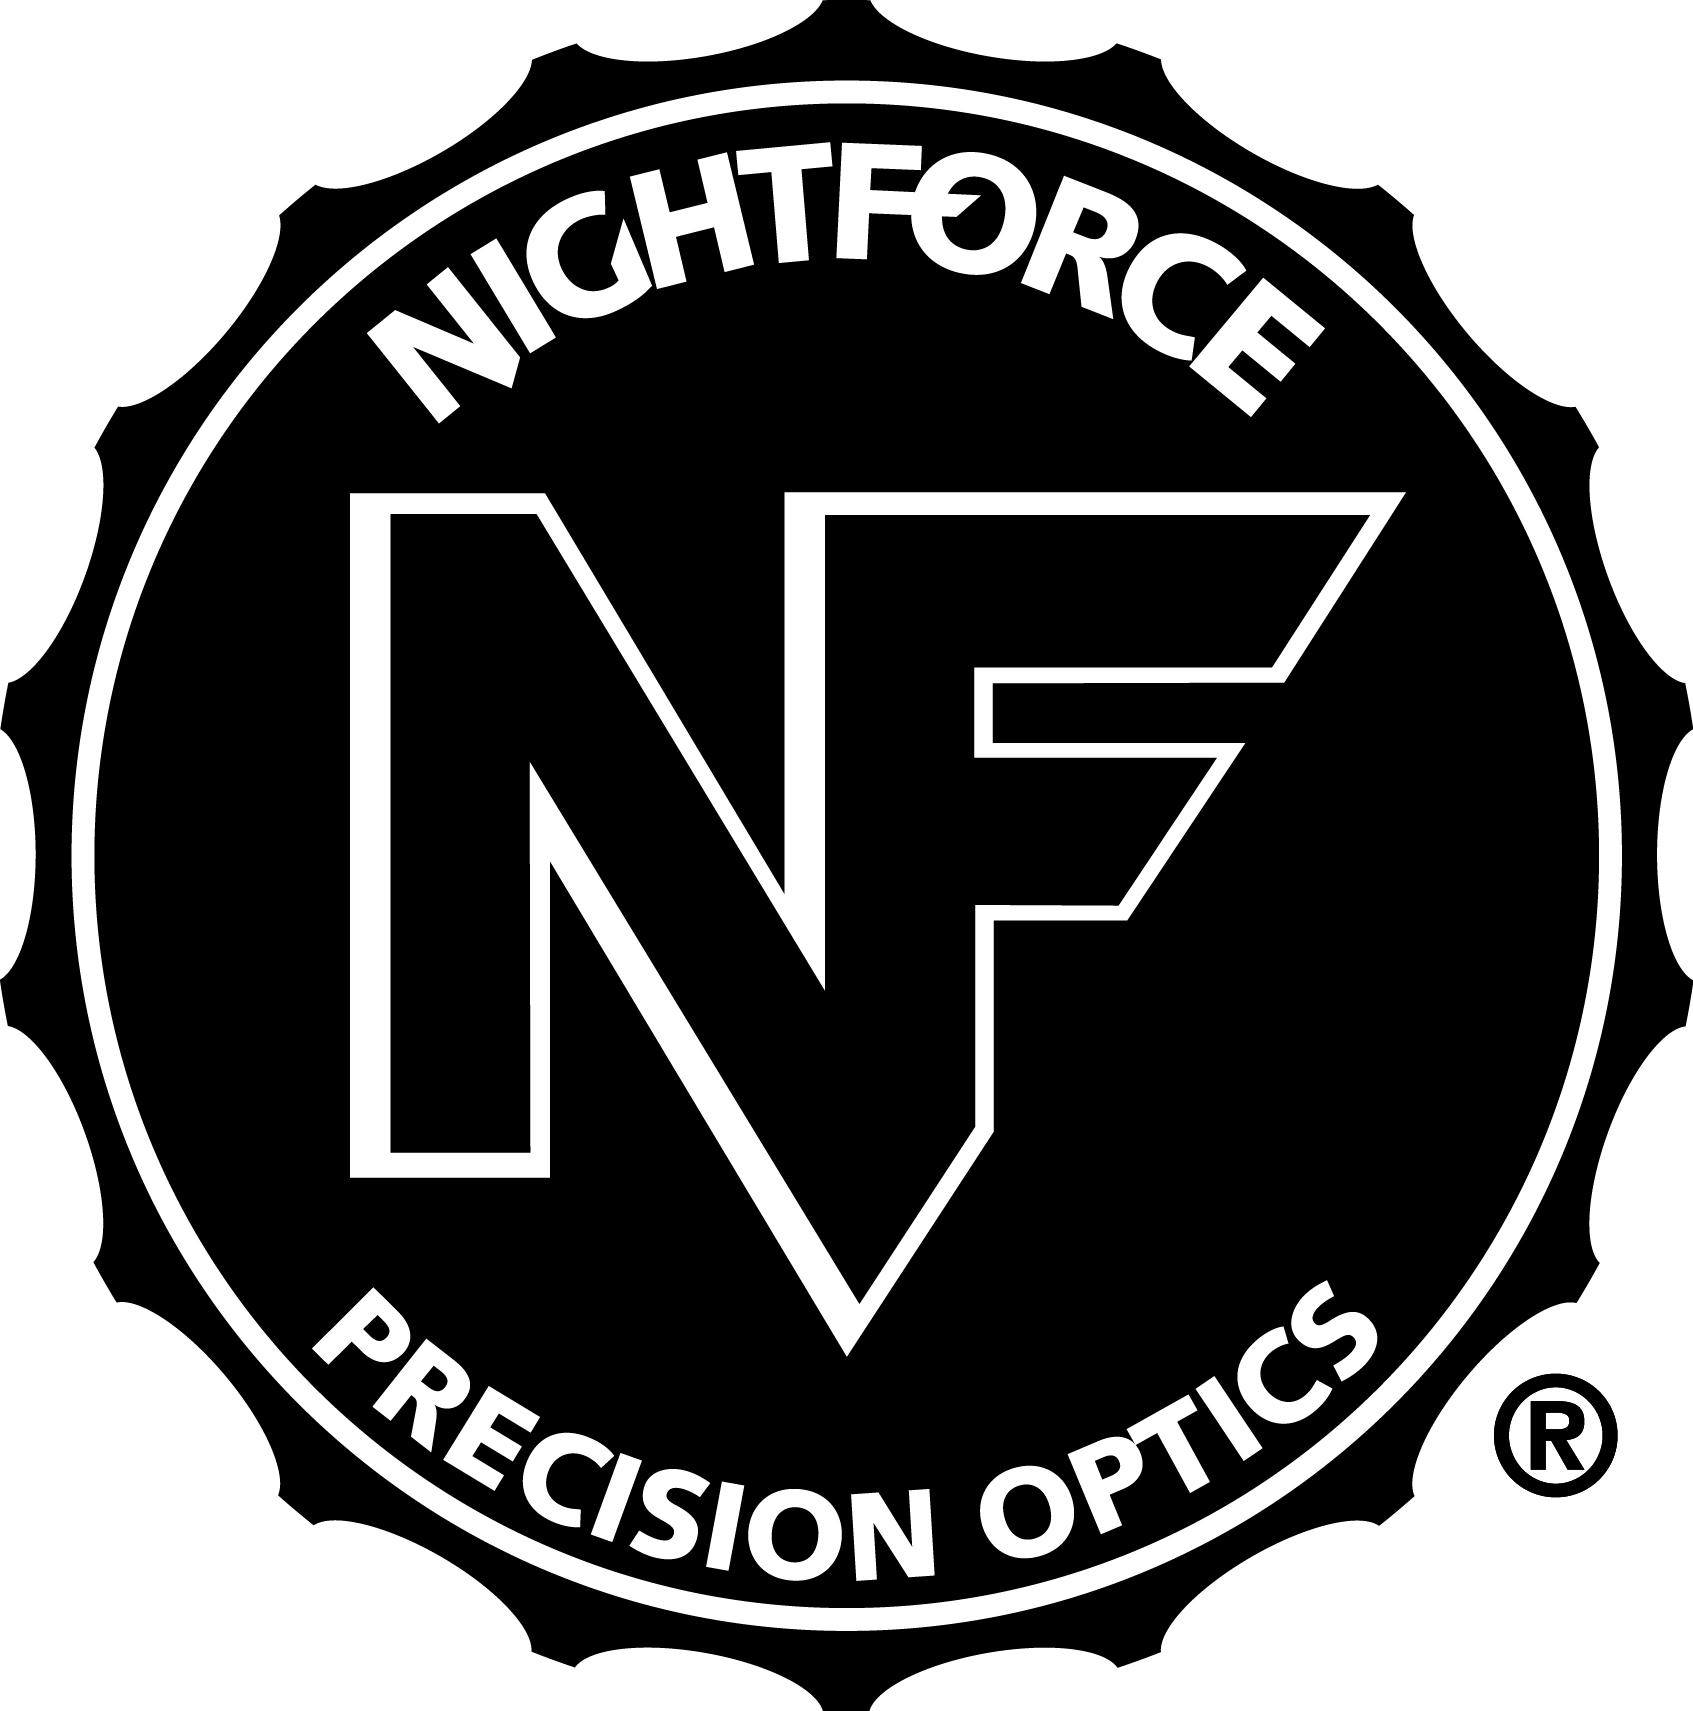 Nightforce Precision Optics Sticker Decal Black Silver 5/"